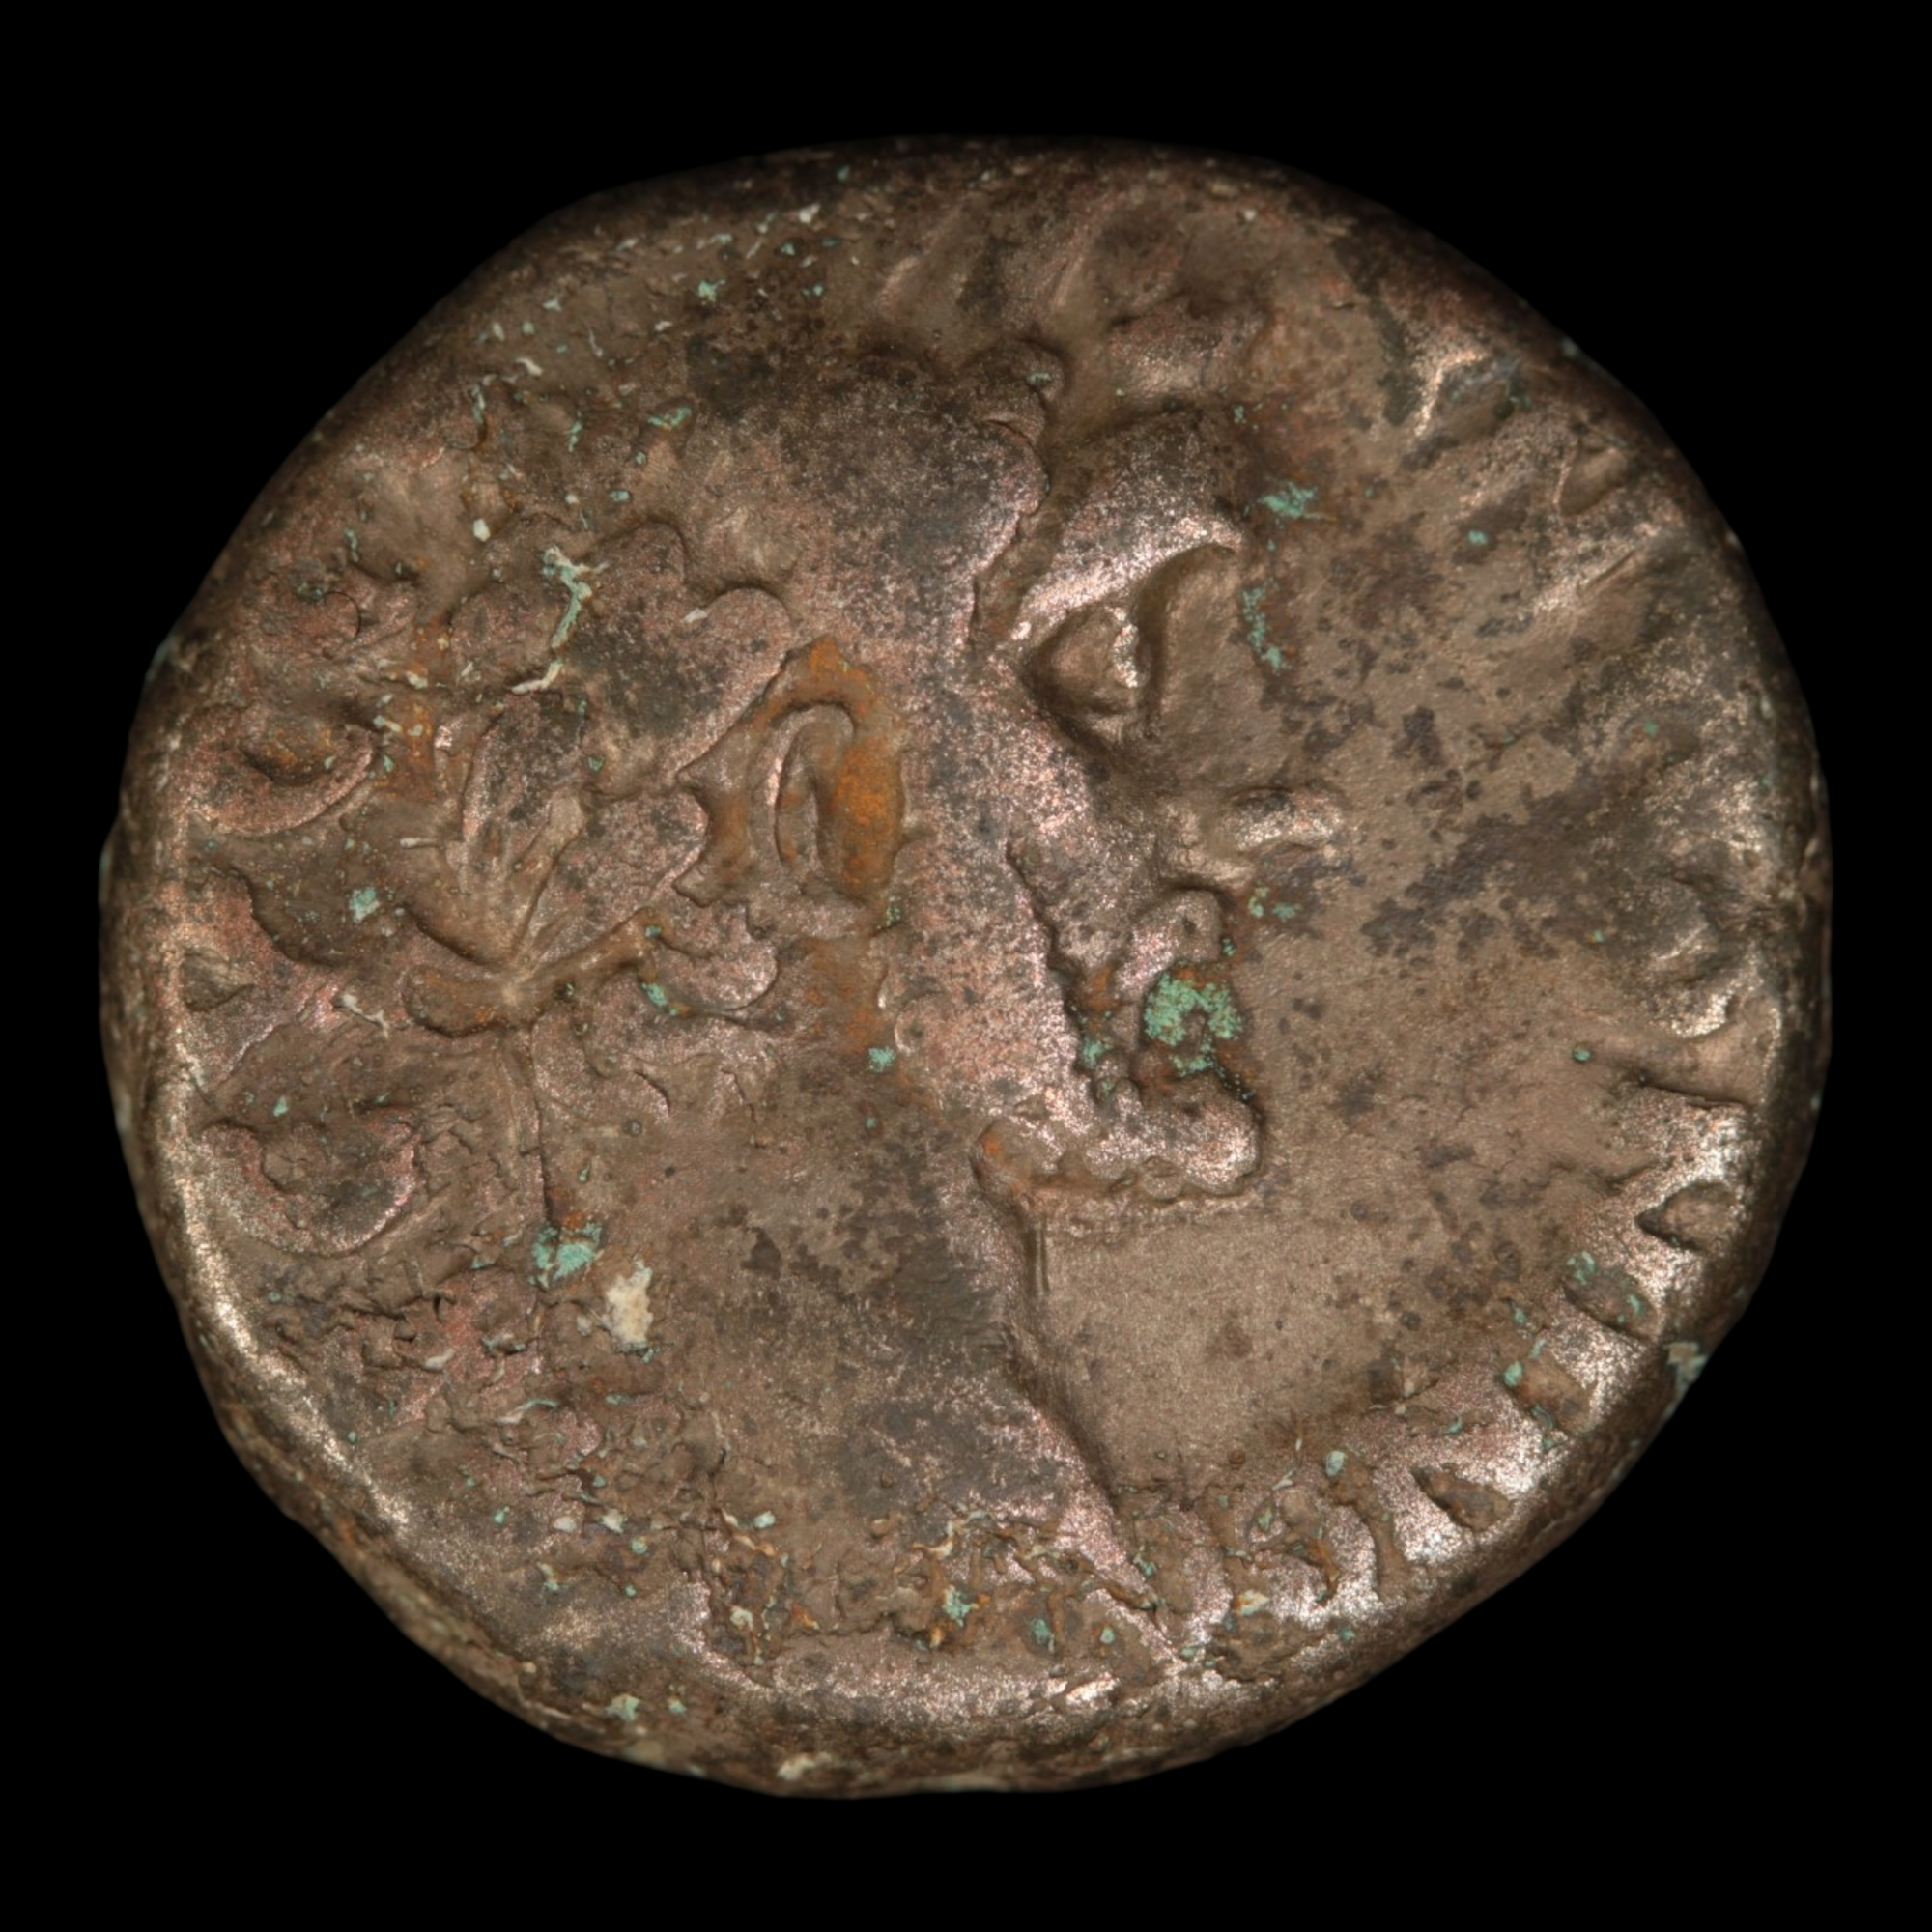 Roman Egypt, Emperor Antoninus Pius Tetradrachm - c. 138 to 161 CE - Alexandria, Egypt - 7/26/23 Auction